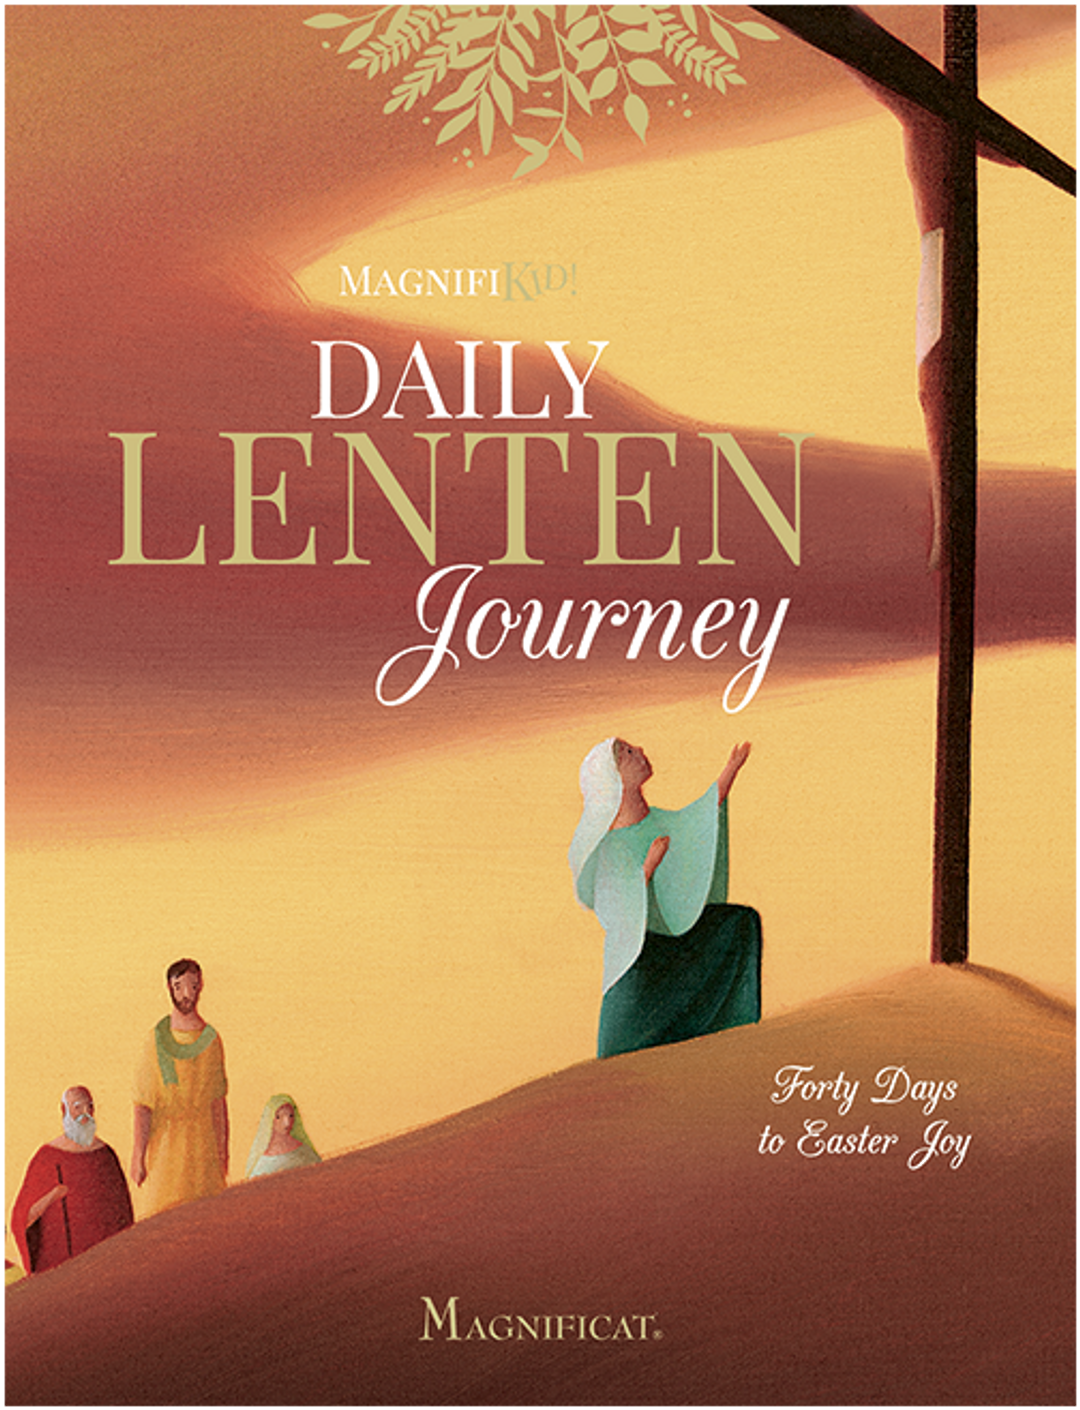 Daily Lenten Journey - Magnifikid!